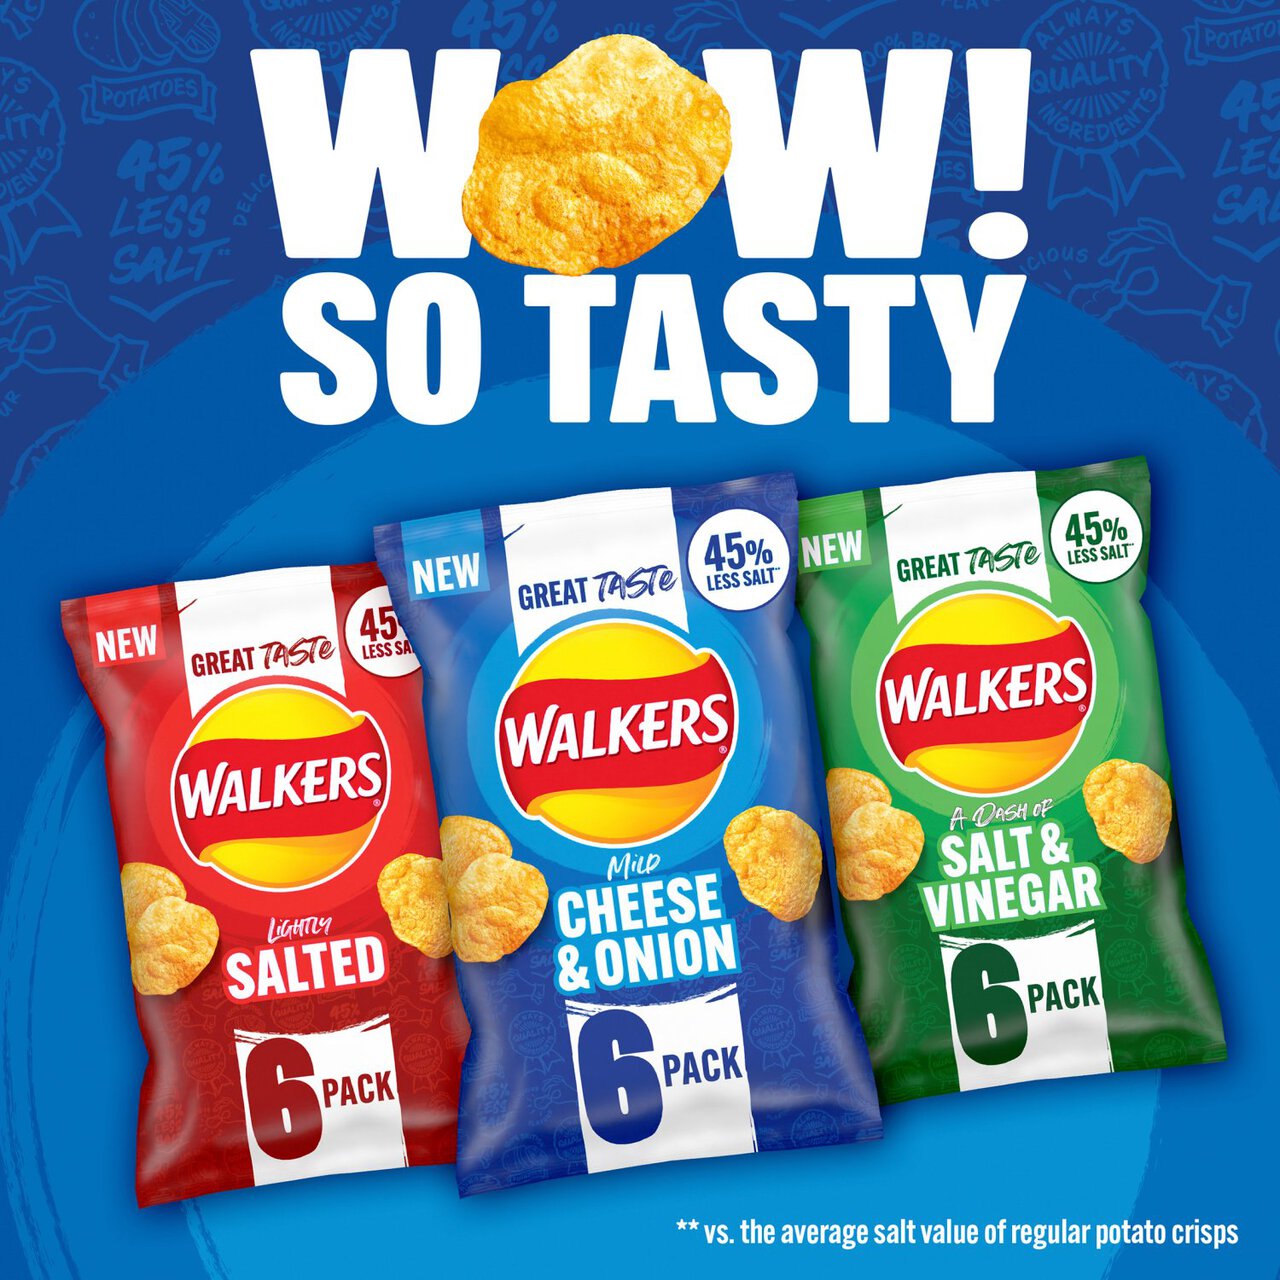 Walkers Less Salt Mild Cheese & Onion Multipack Crisps 6 per pack